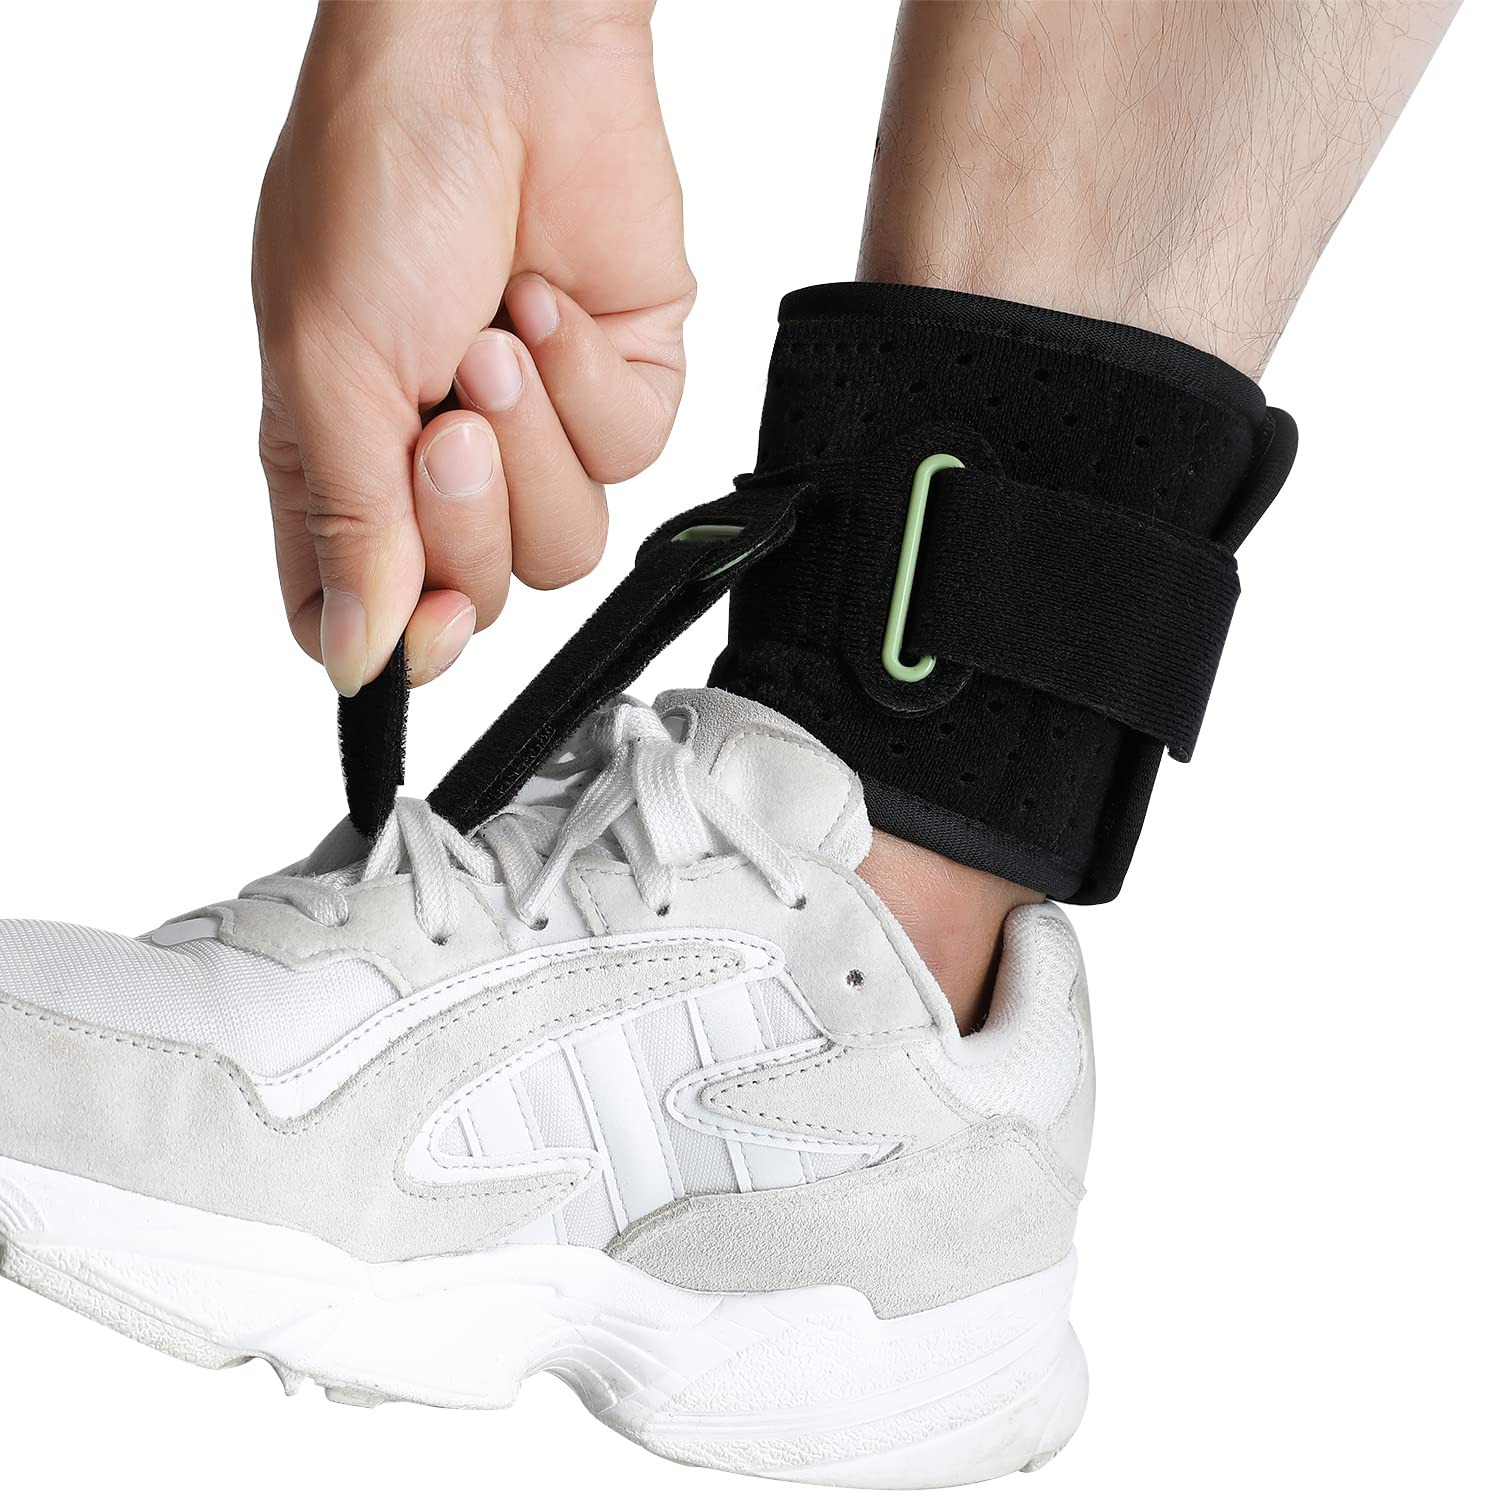 Adjustable Drop Foot Brace Foot Up Afo Brace Unisex Fits for Right/Left Foot Ort